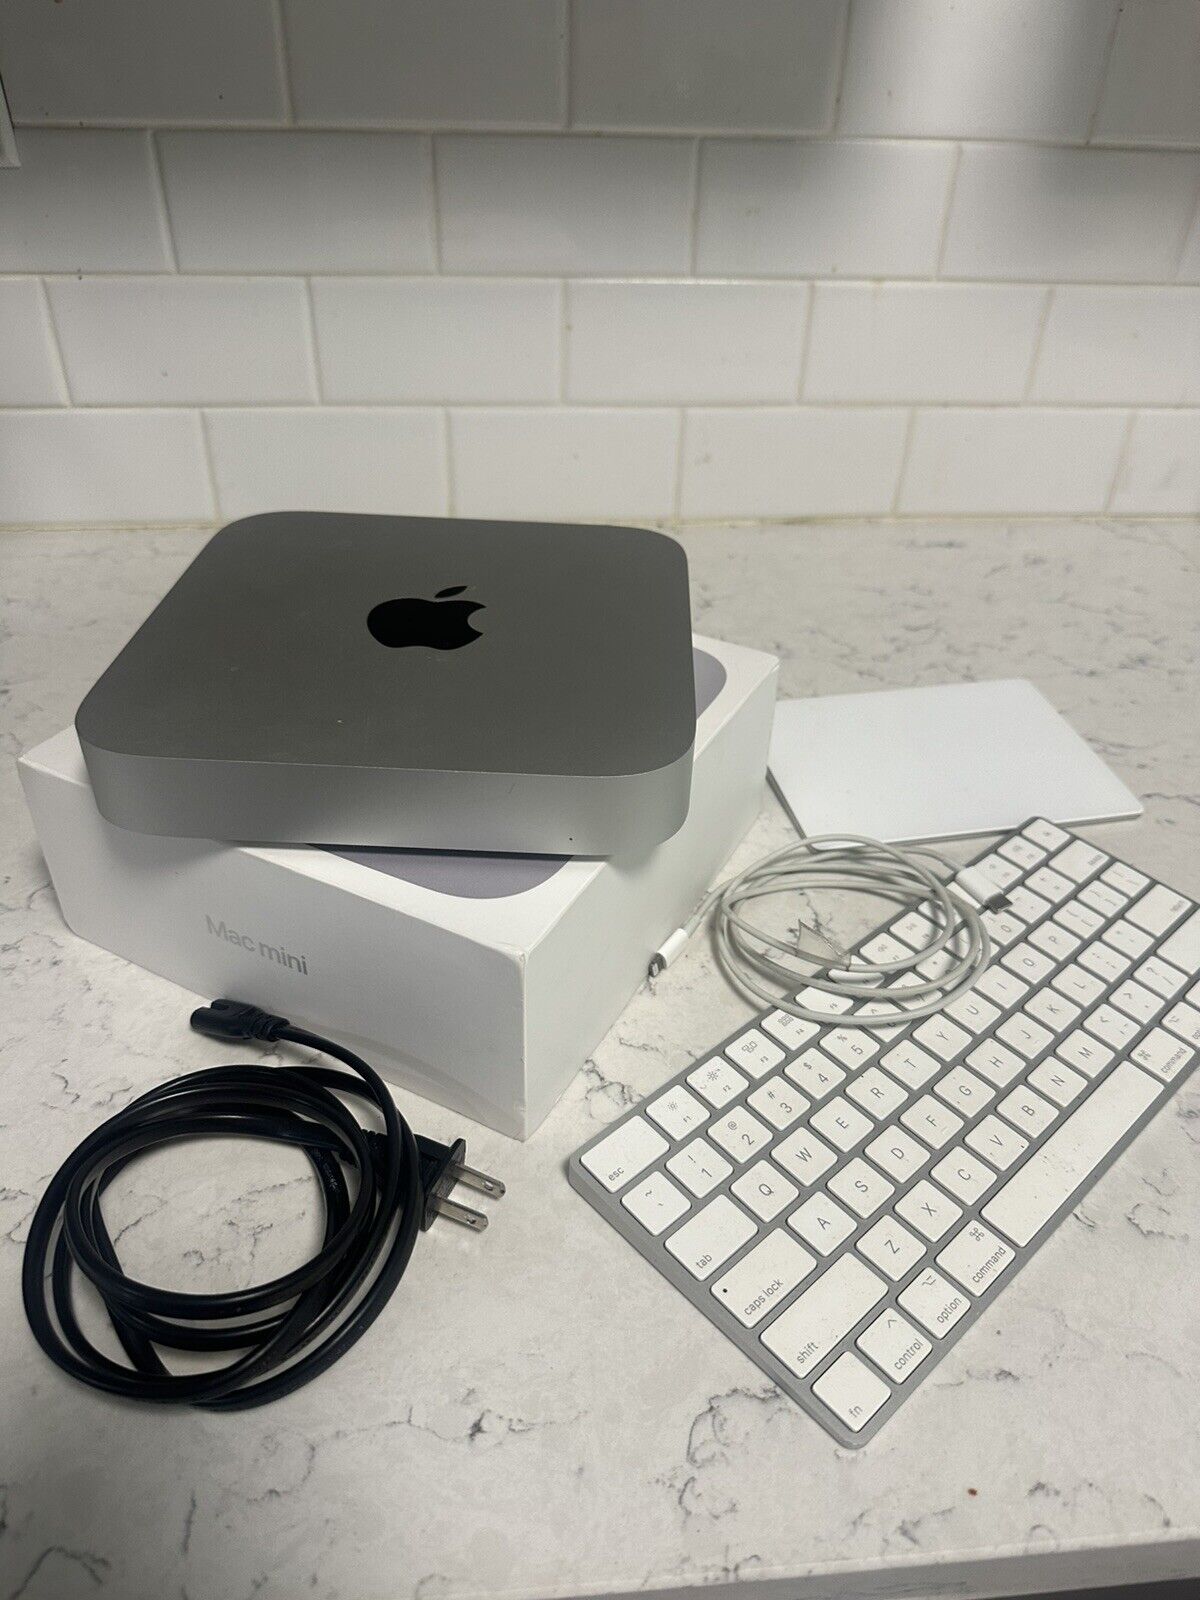 Apple M1 Mac mini With Apple Keyboard And Track Pad (512GB SSD, 8GB RAM